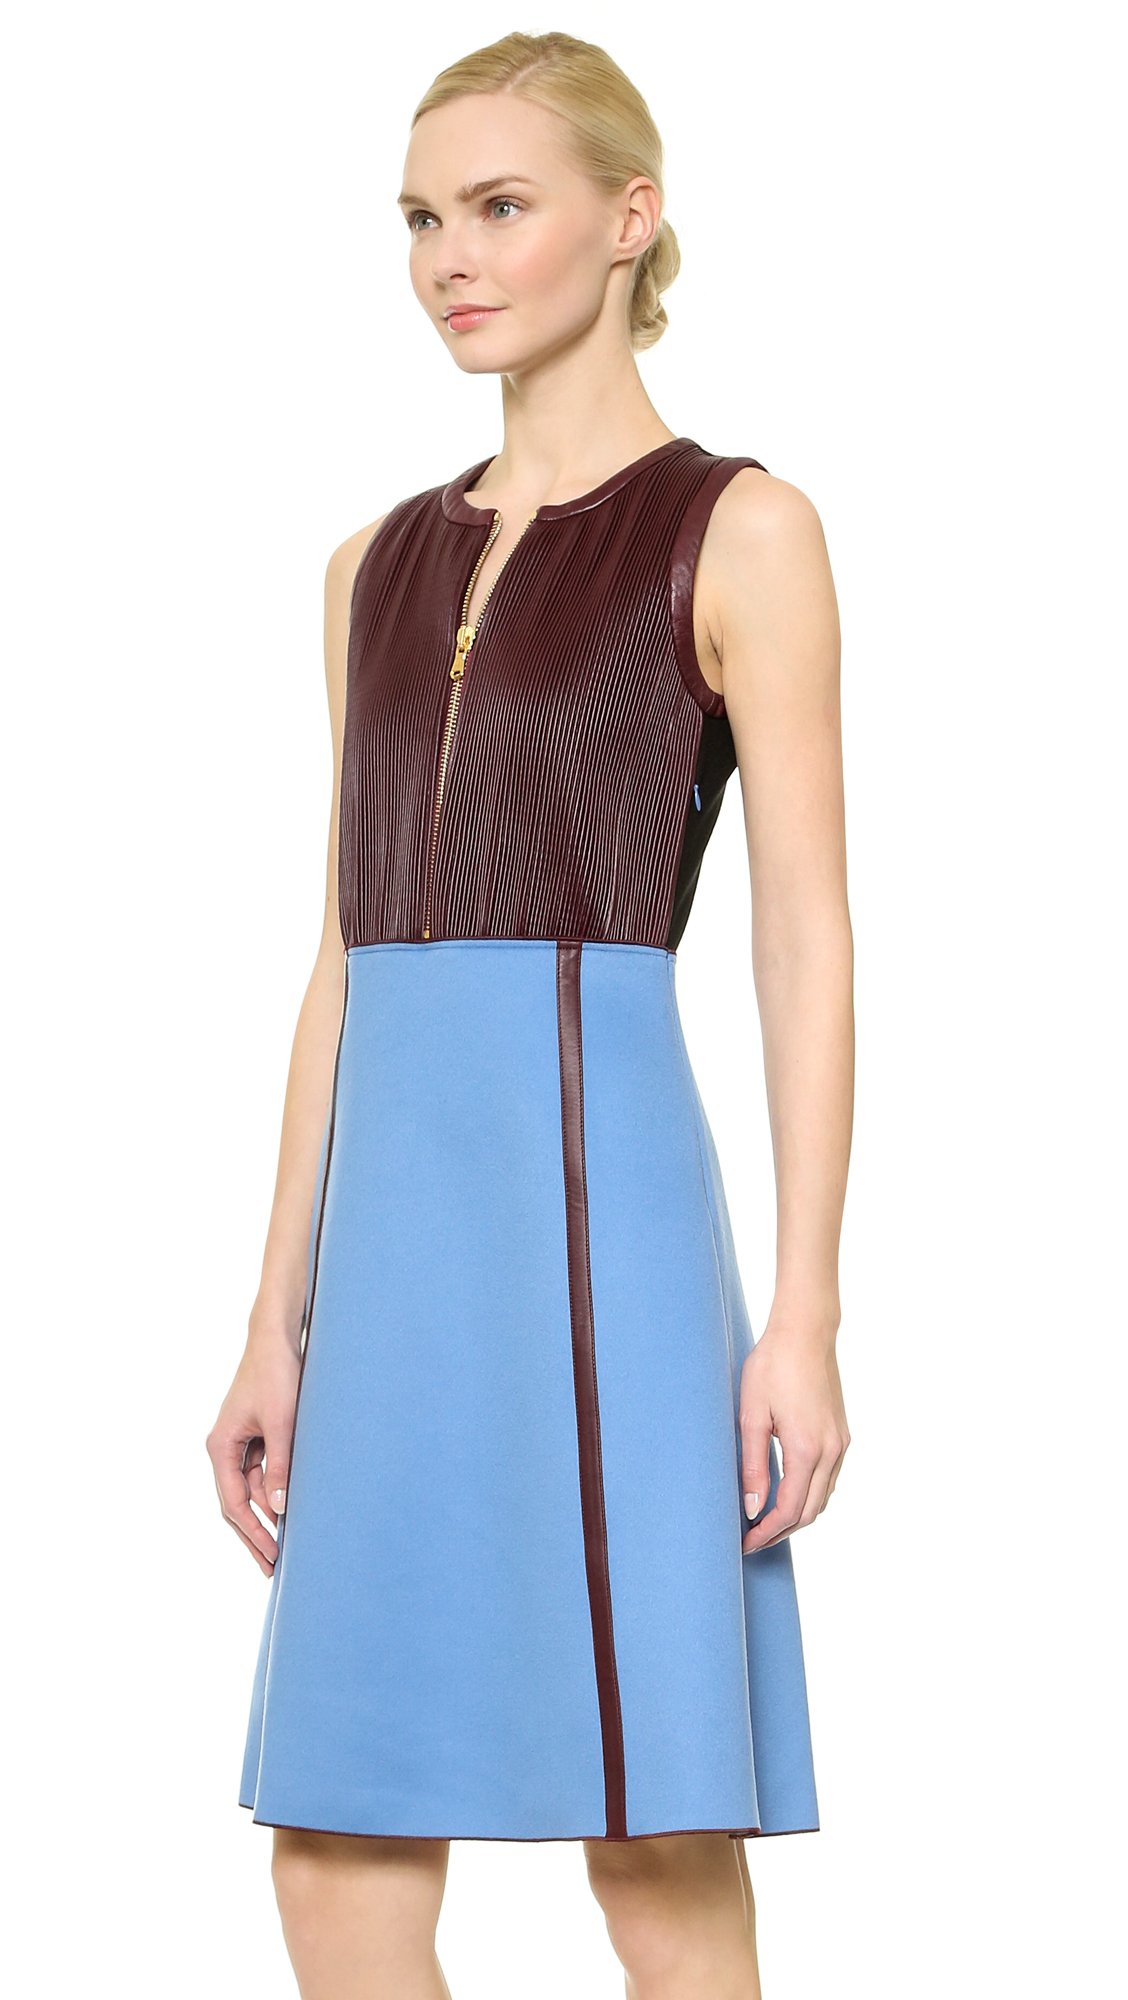 Lyst - Derek Lam Pleated Leather Combo Dress - Lake in Blue